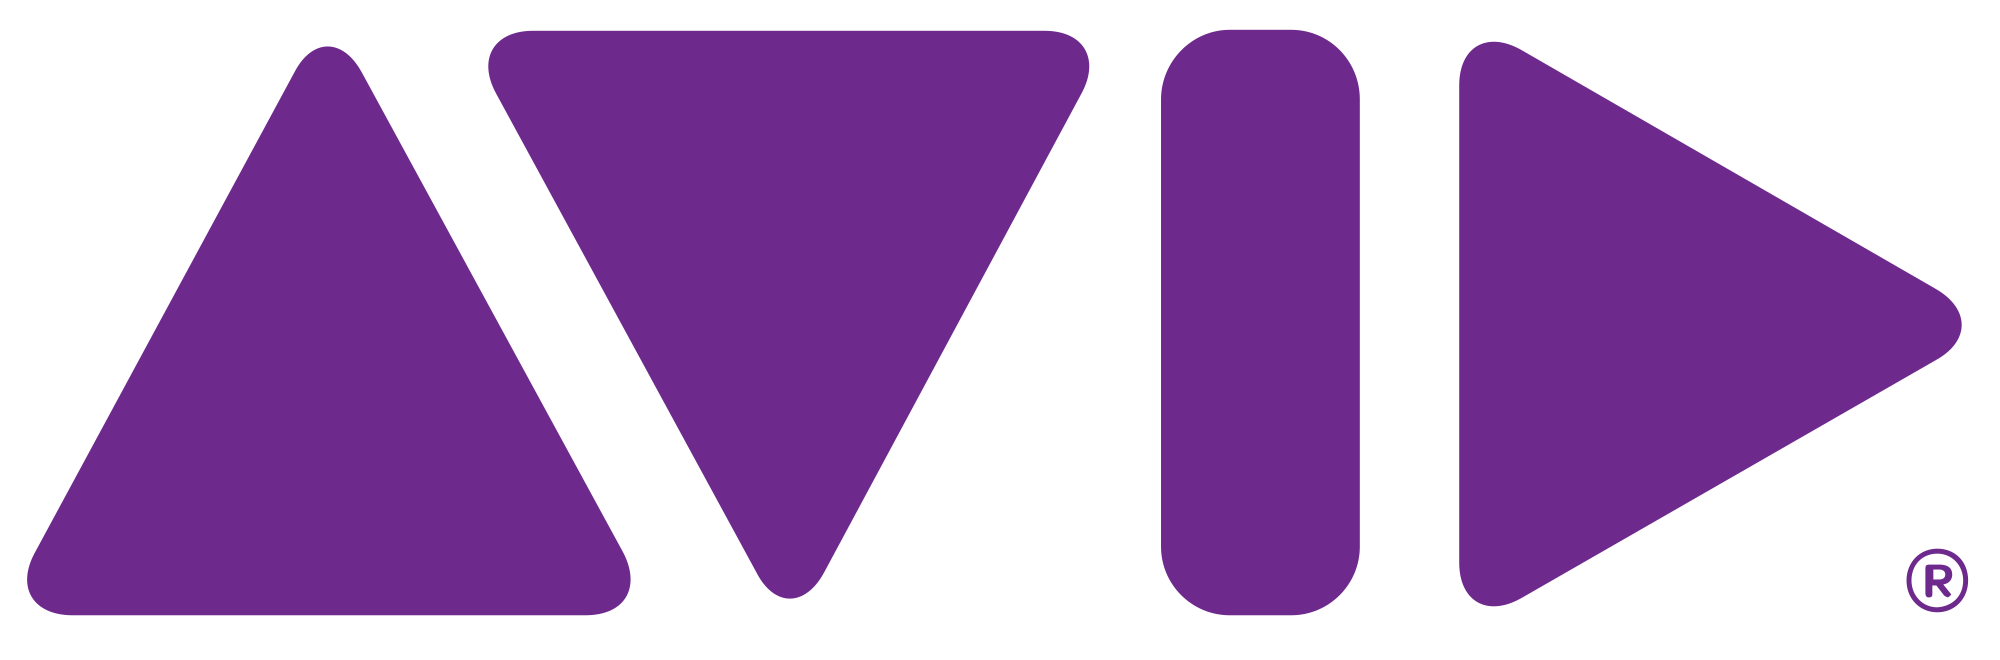 Avid Logo - File:Avid logo purple 2017.svg - Wikimedia Commons